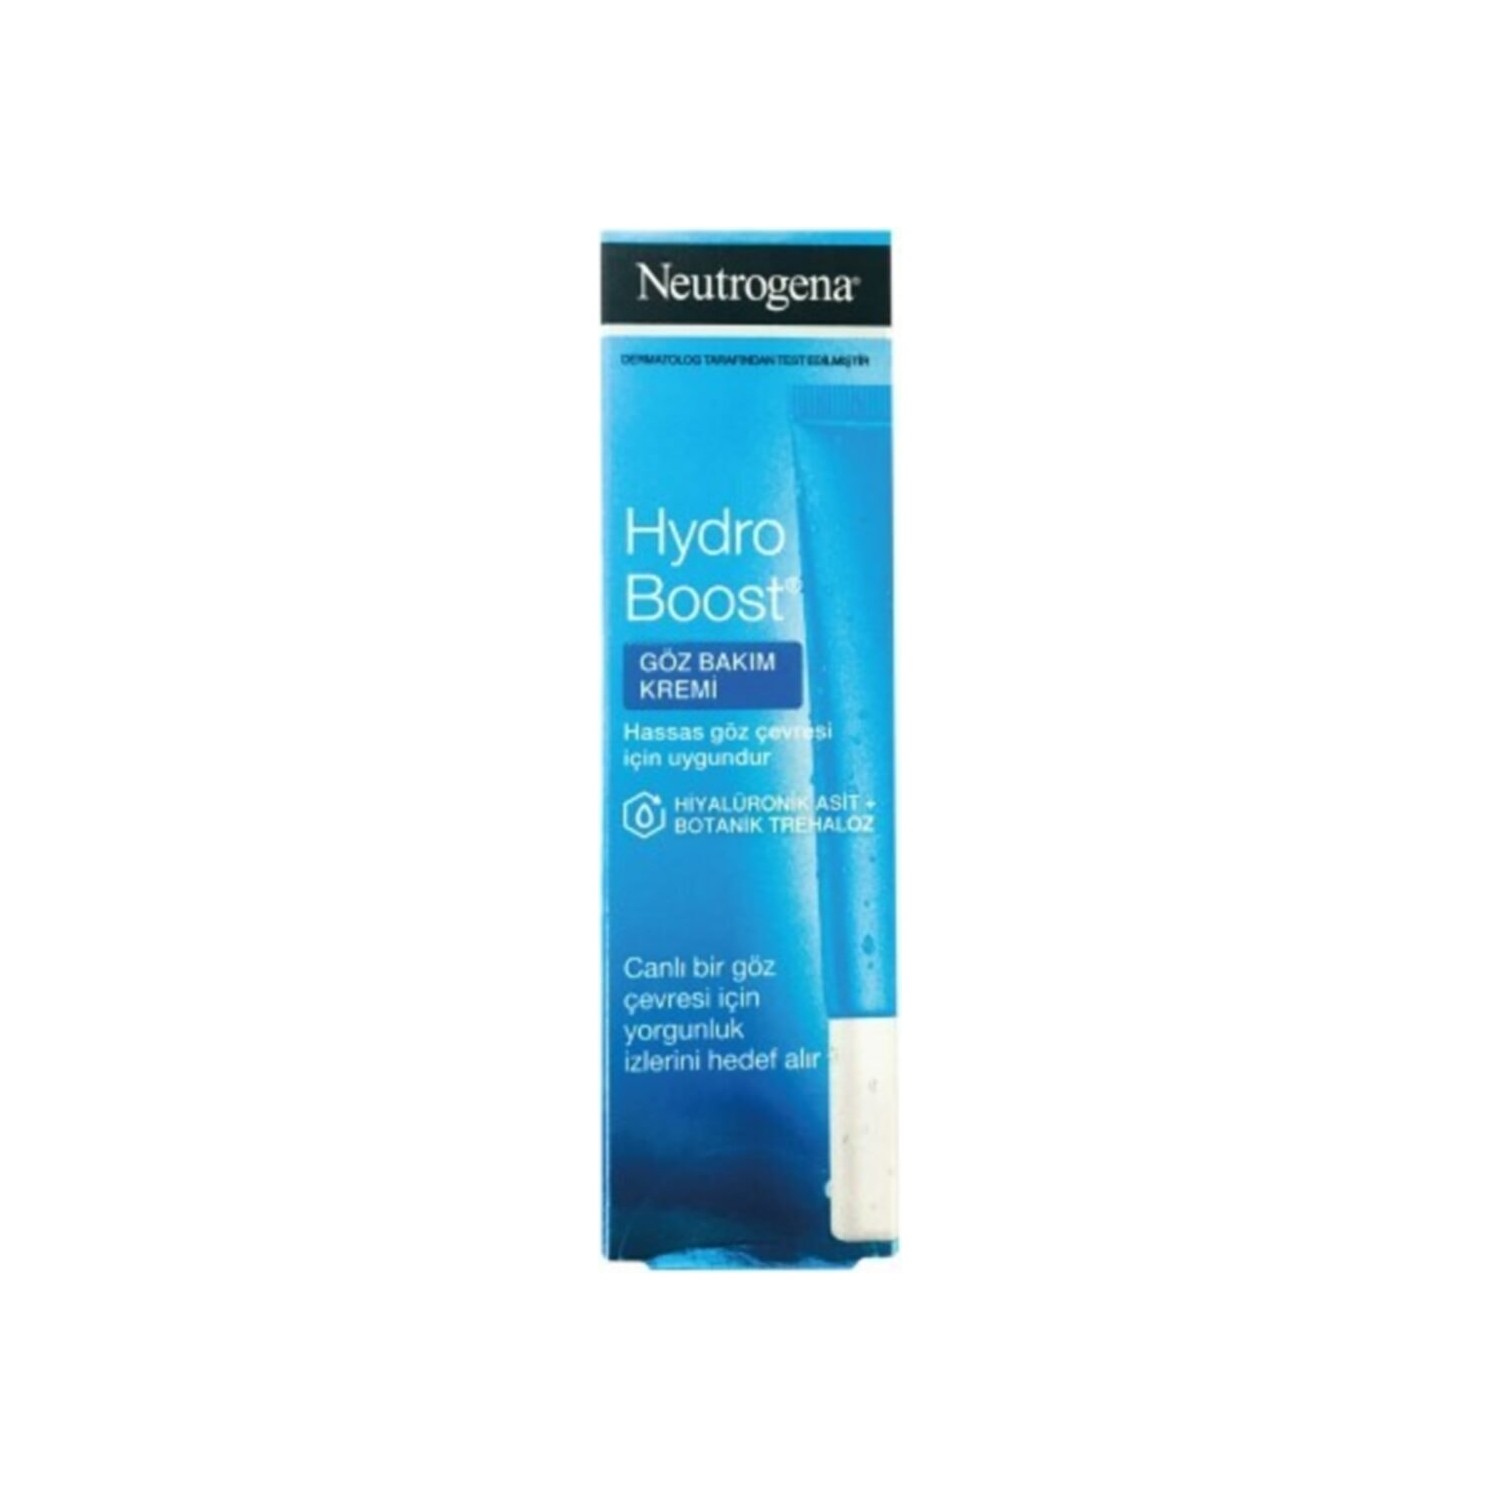 Крем Neutrogena Hydro Boost для кожи вокруг глаз против усталости, 15 мл крем увлажняющий neutrogena hydro boost water gel для нормальной кожи 2 упаковки по 50 мл